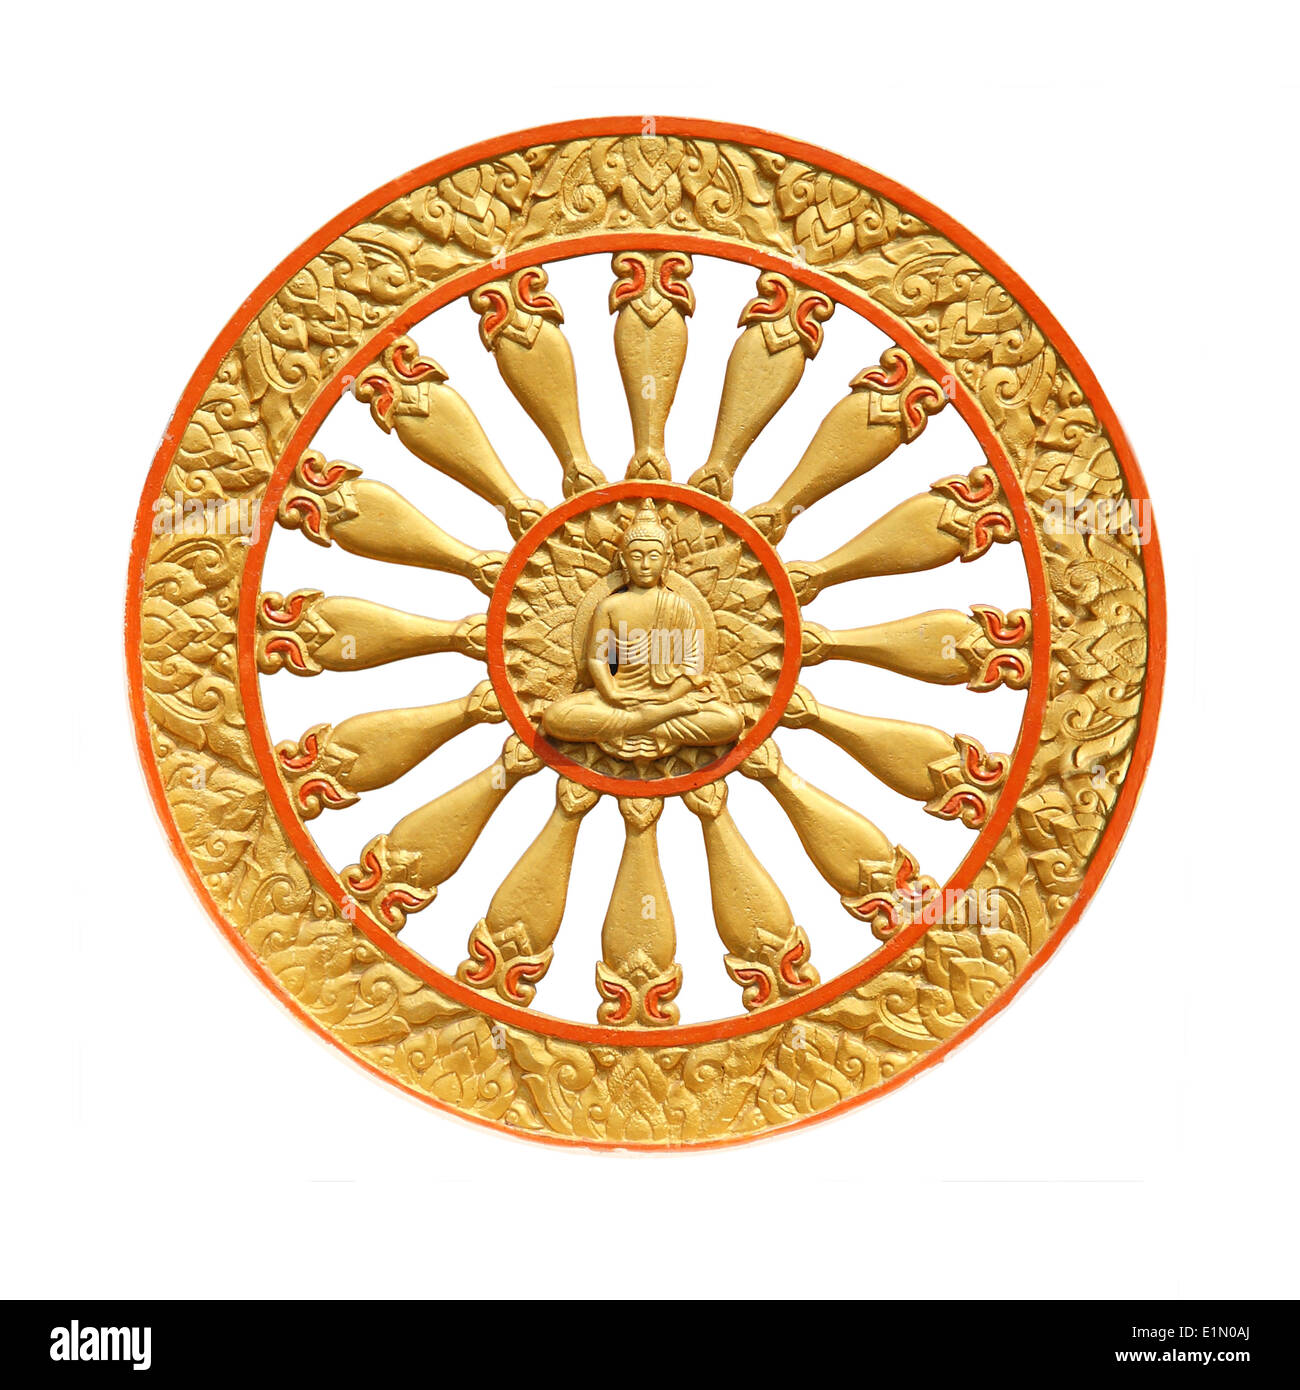 wheel of dhamma of buddhism Stock Photo